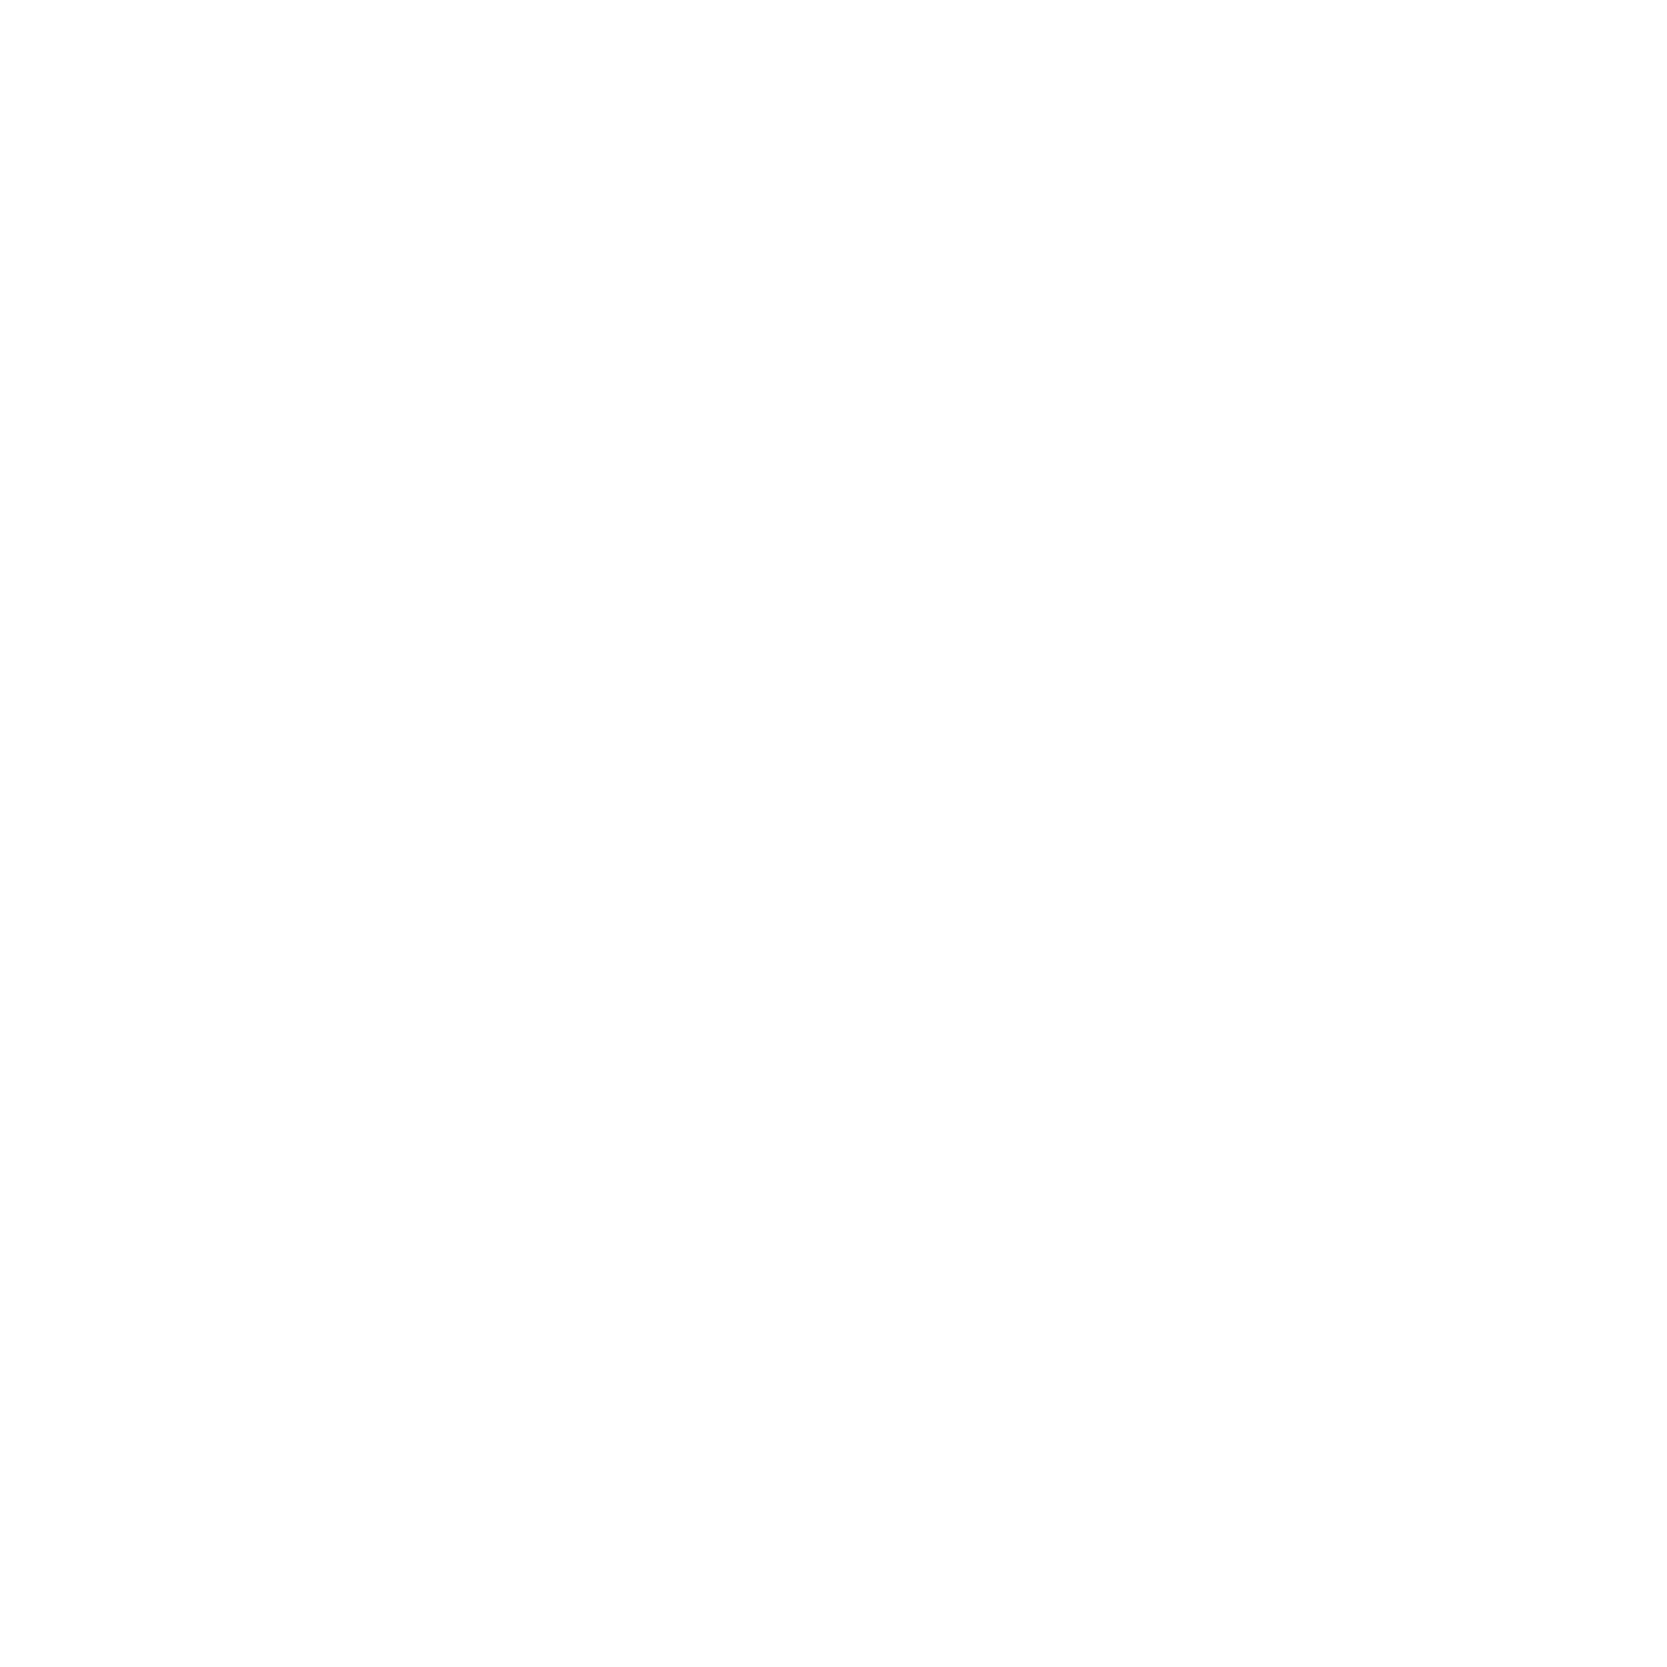 clean and safe turismo de portuglal